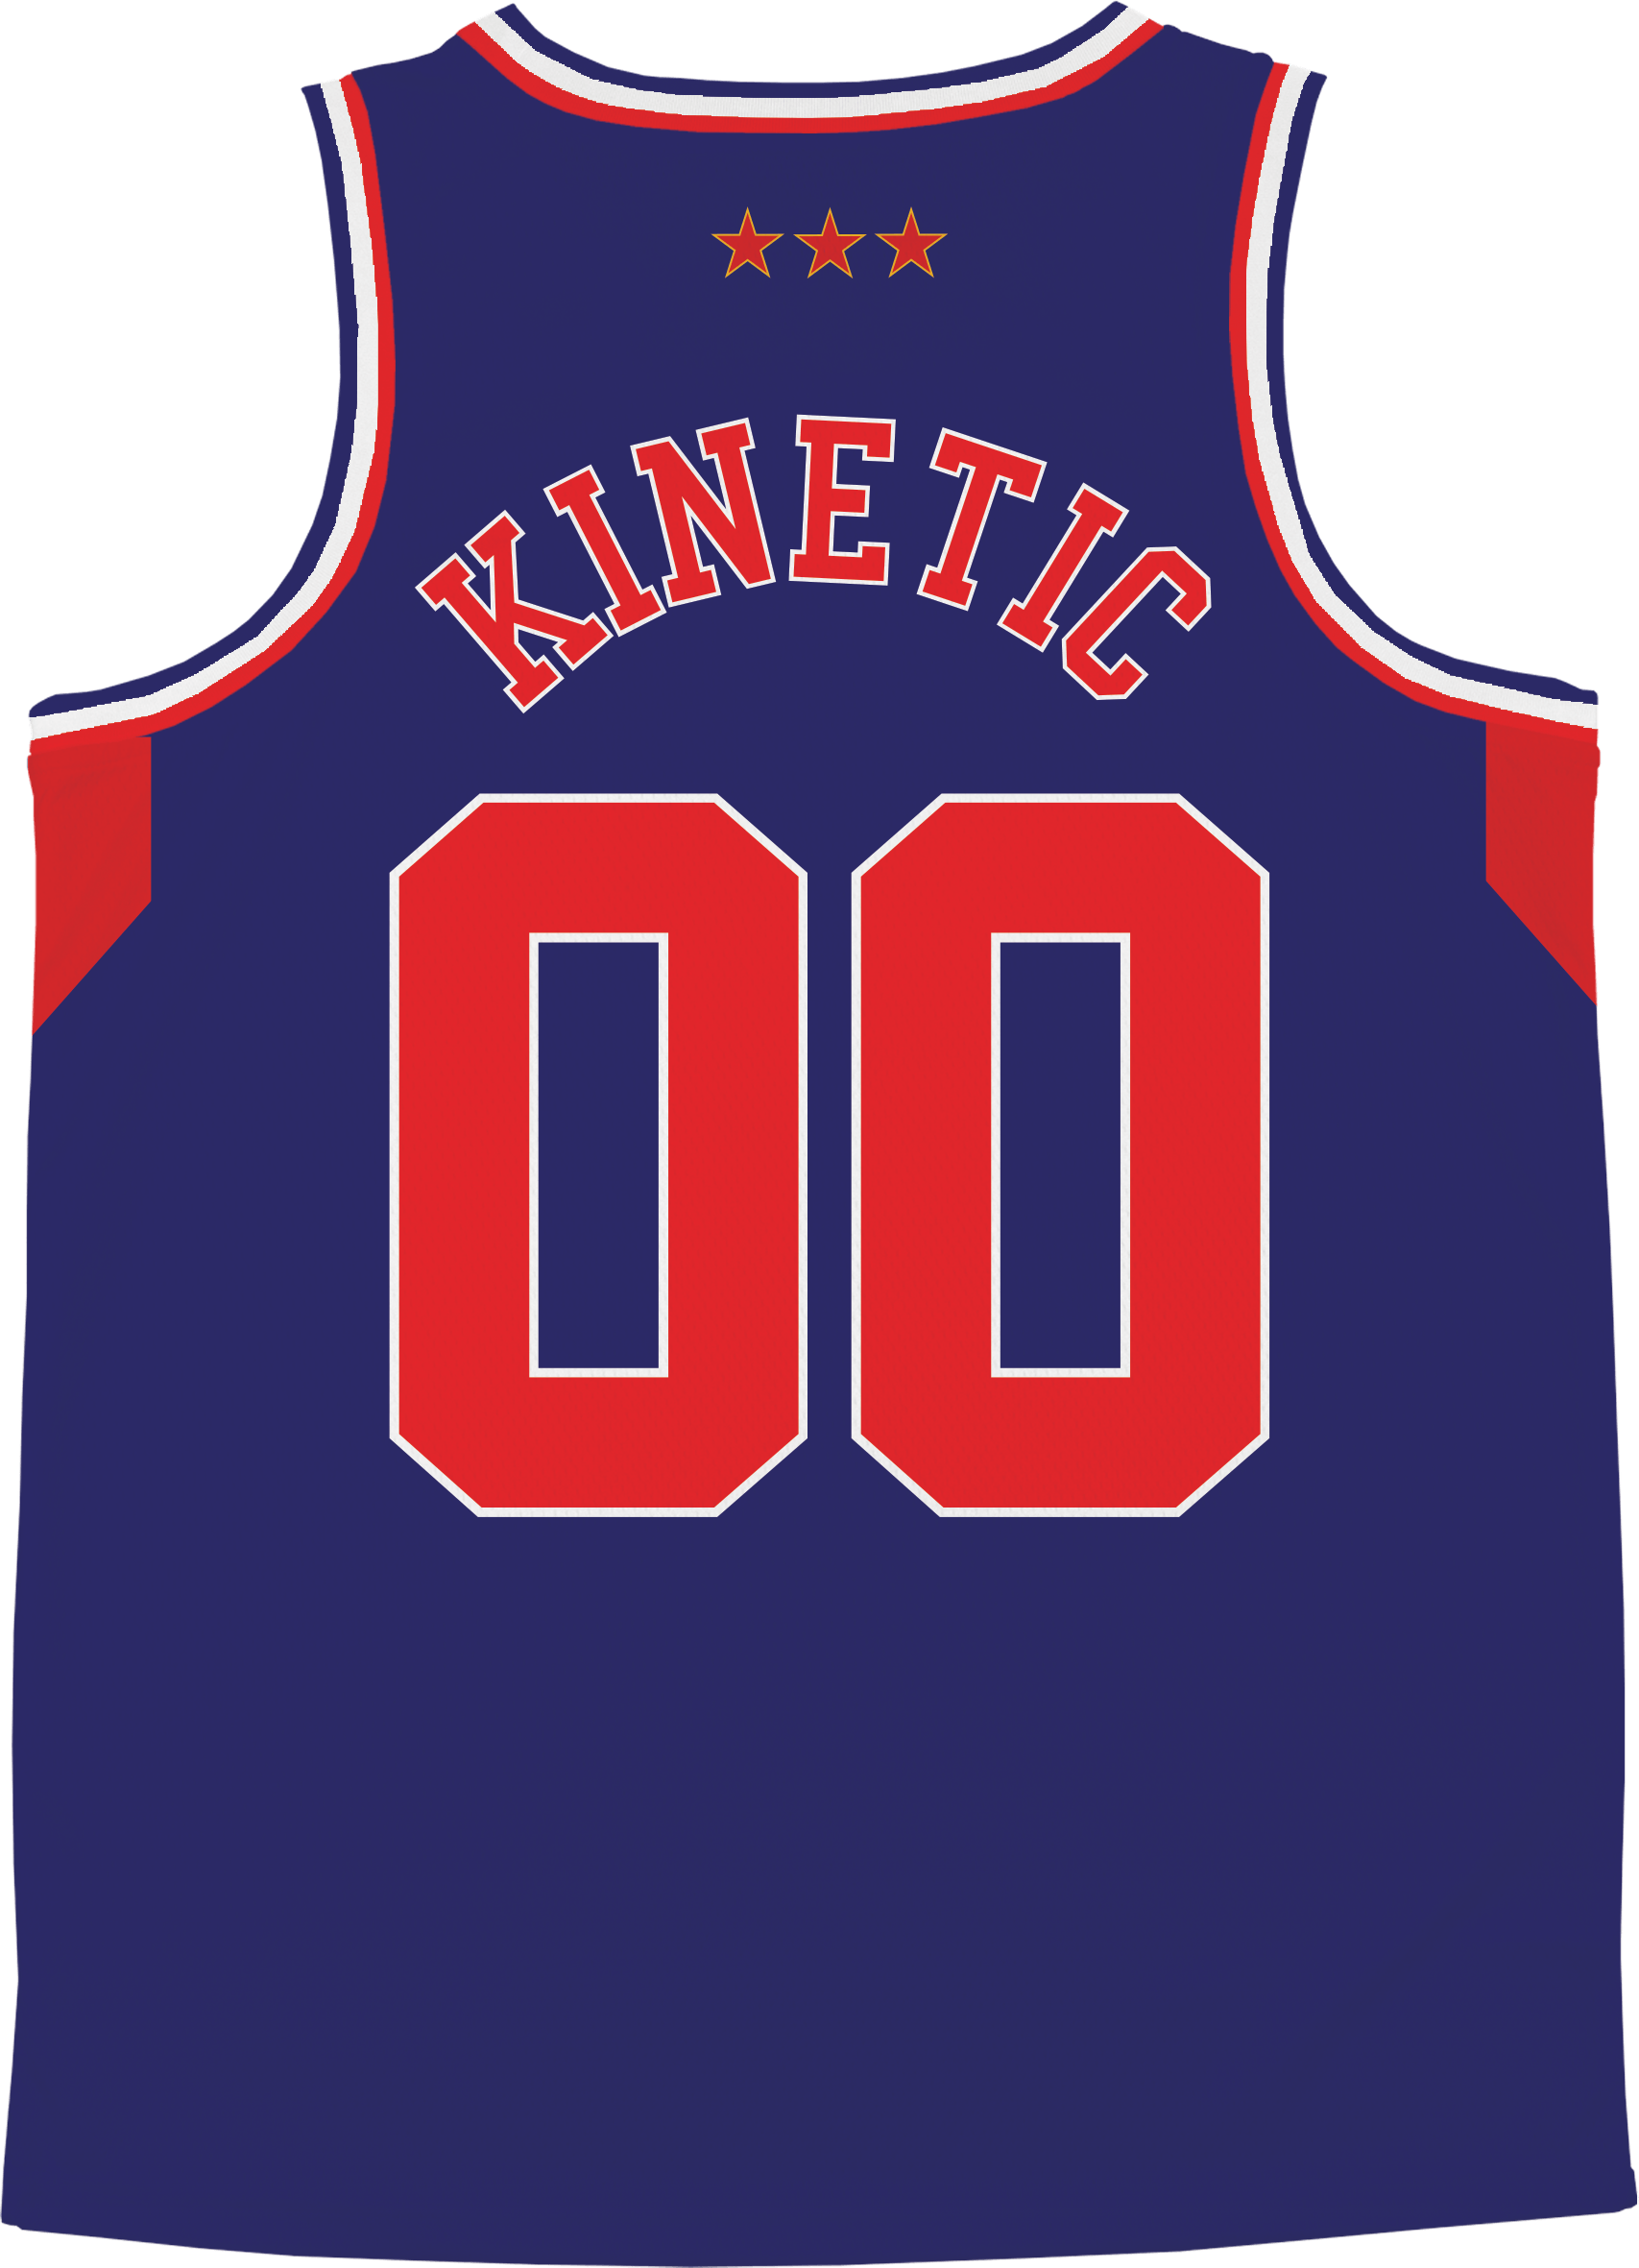 Delta Tau Delta - Retro Ballers Basketball Jersey - Kinetic Society